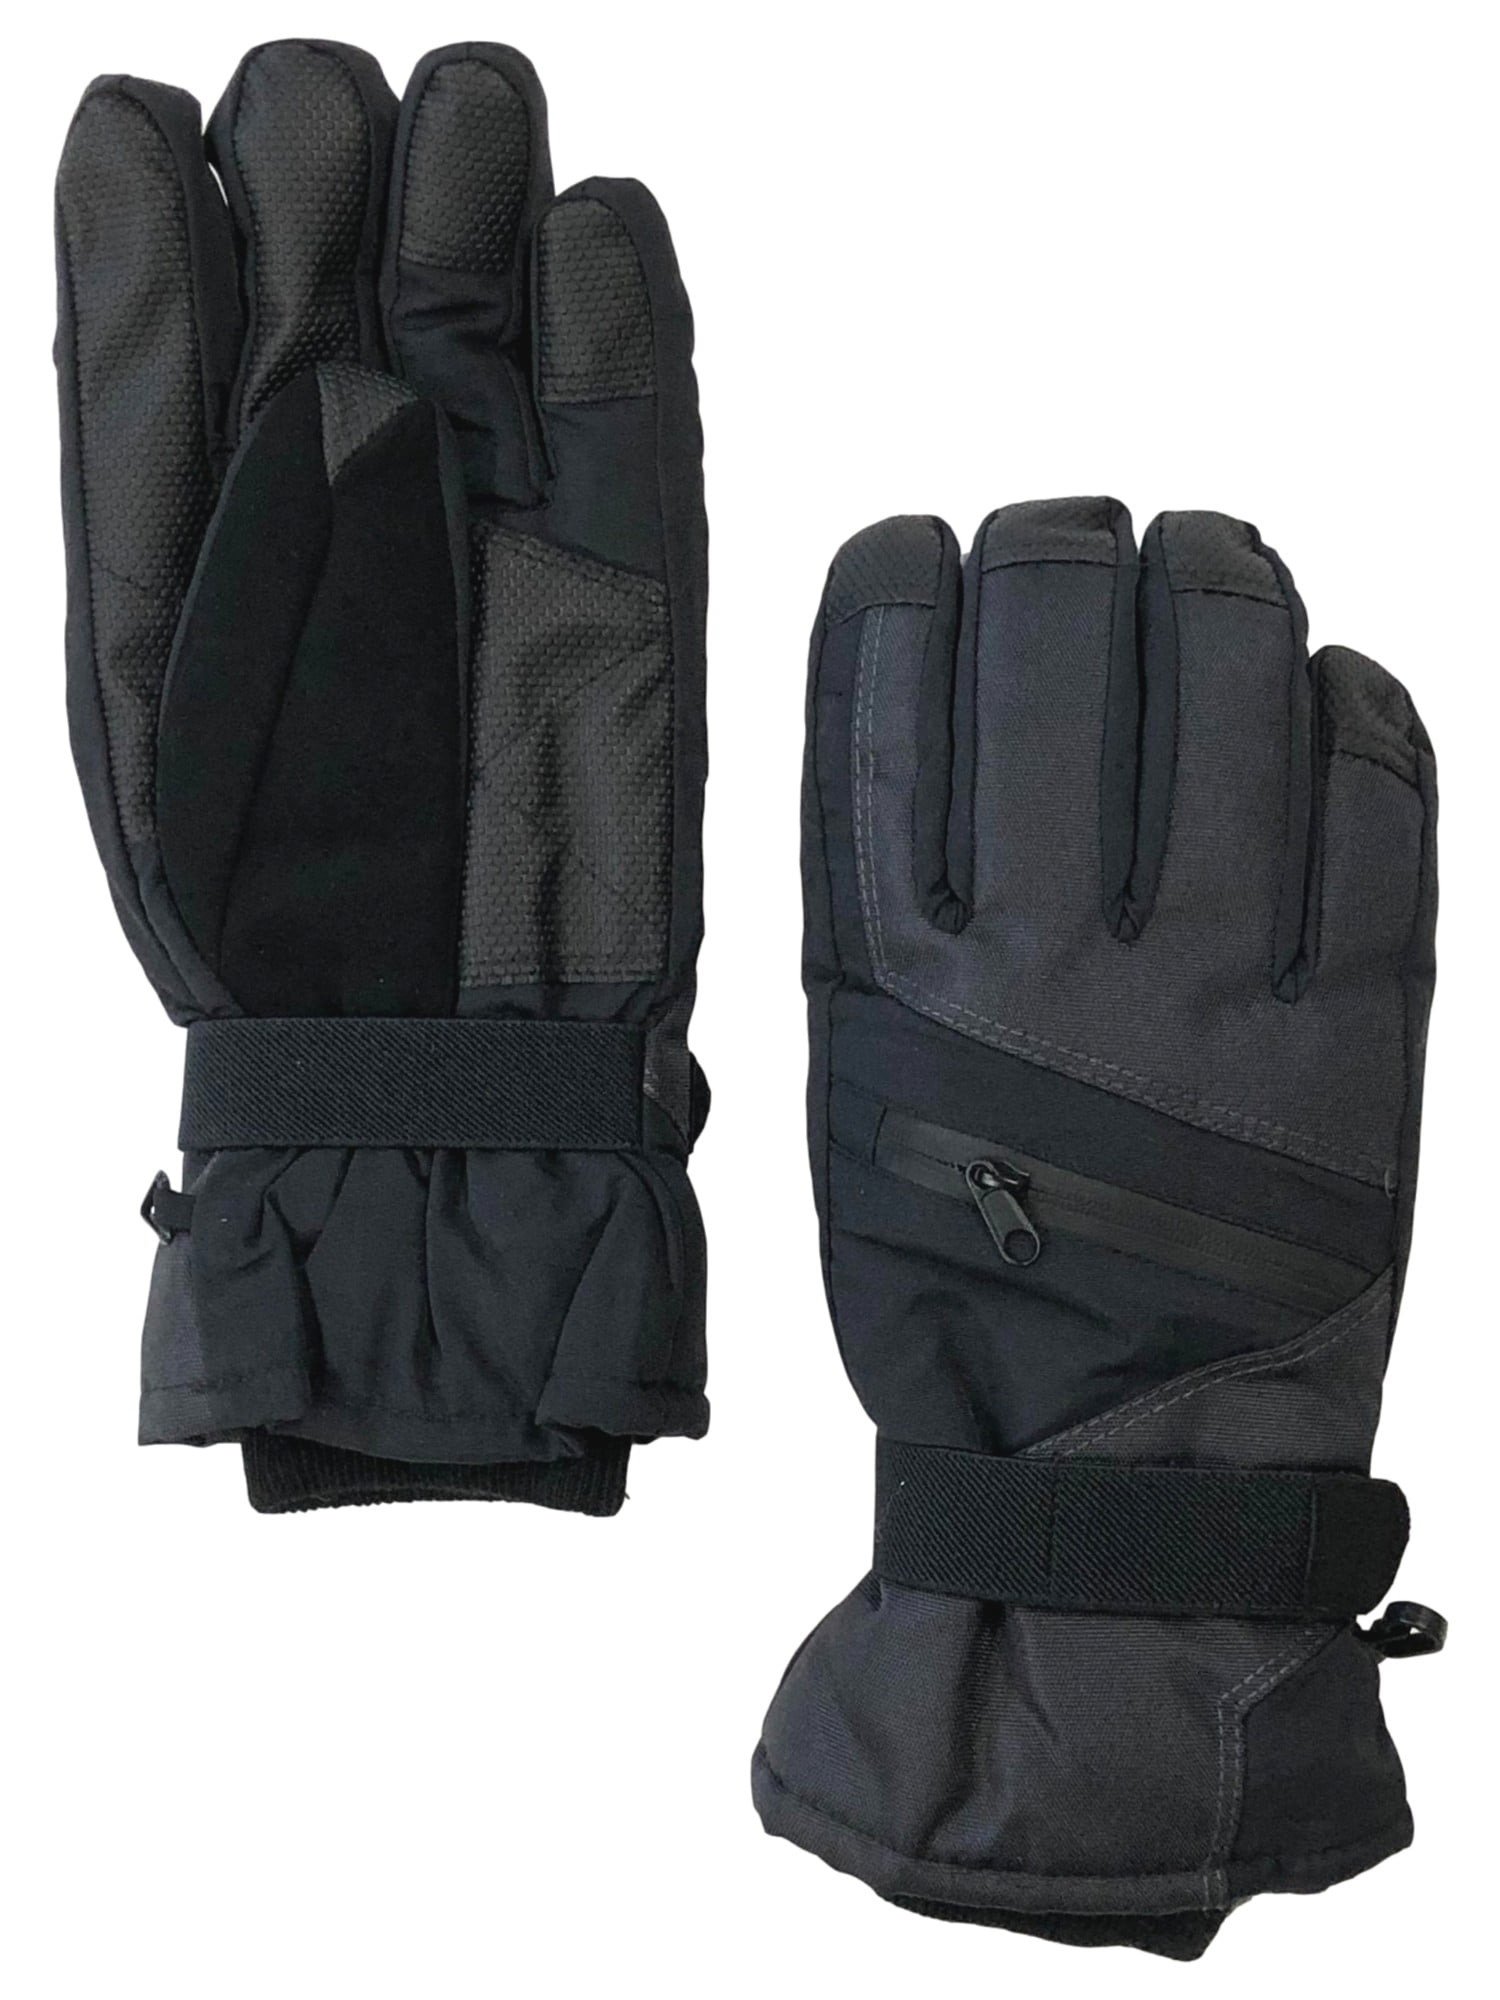 Mens TEK GEAR Fleece & Nylon Touch Screen Compatible BLACK Gloves M/L & L/XL NWT 